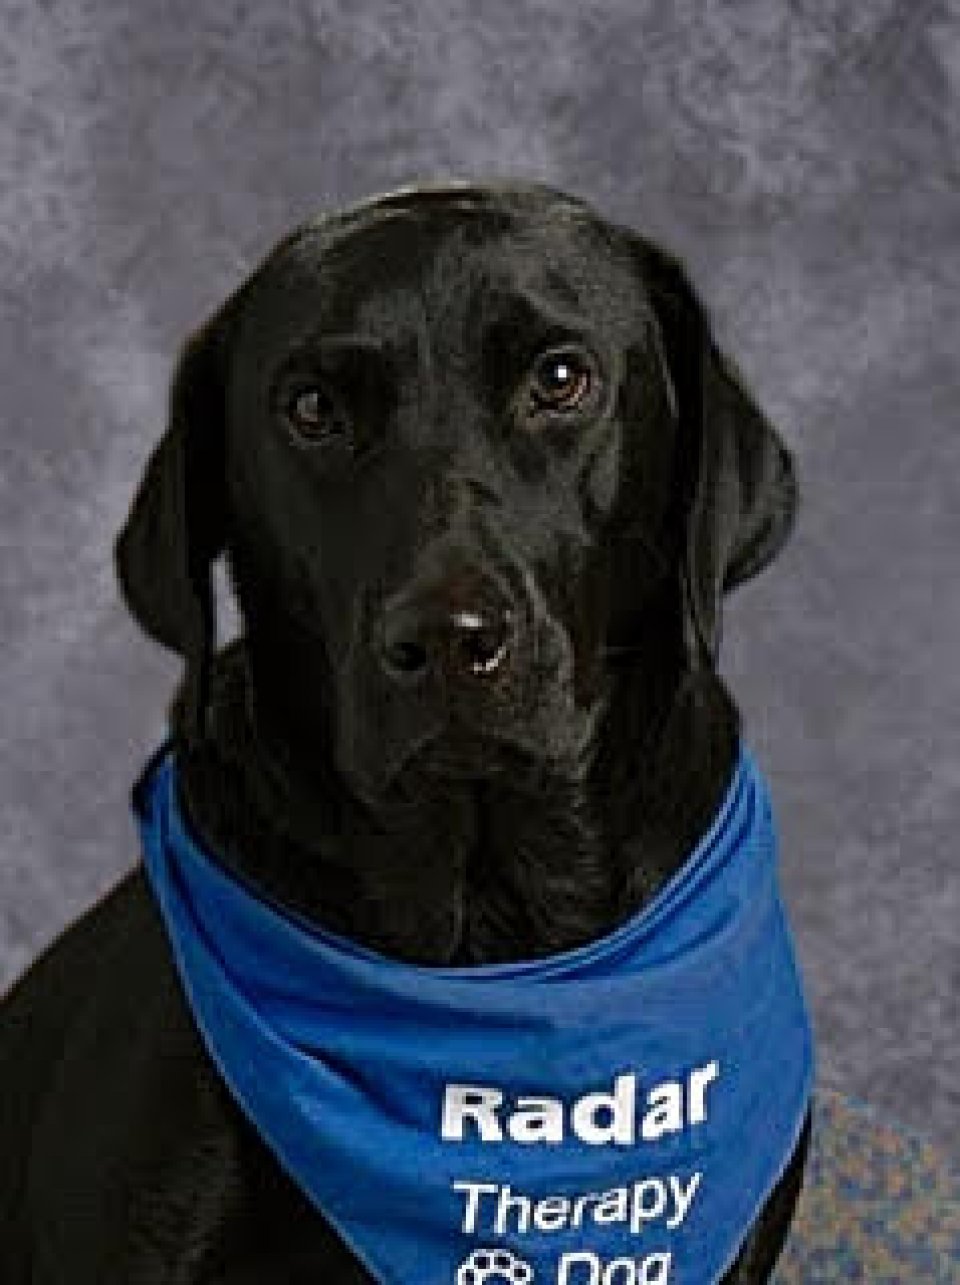 Radar, the school therapy dog